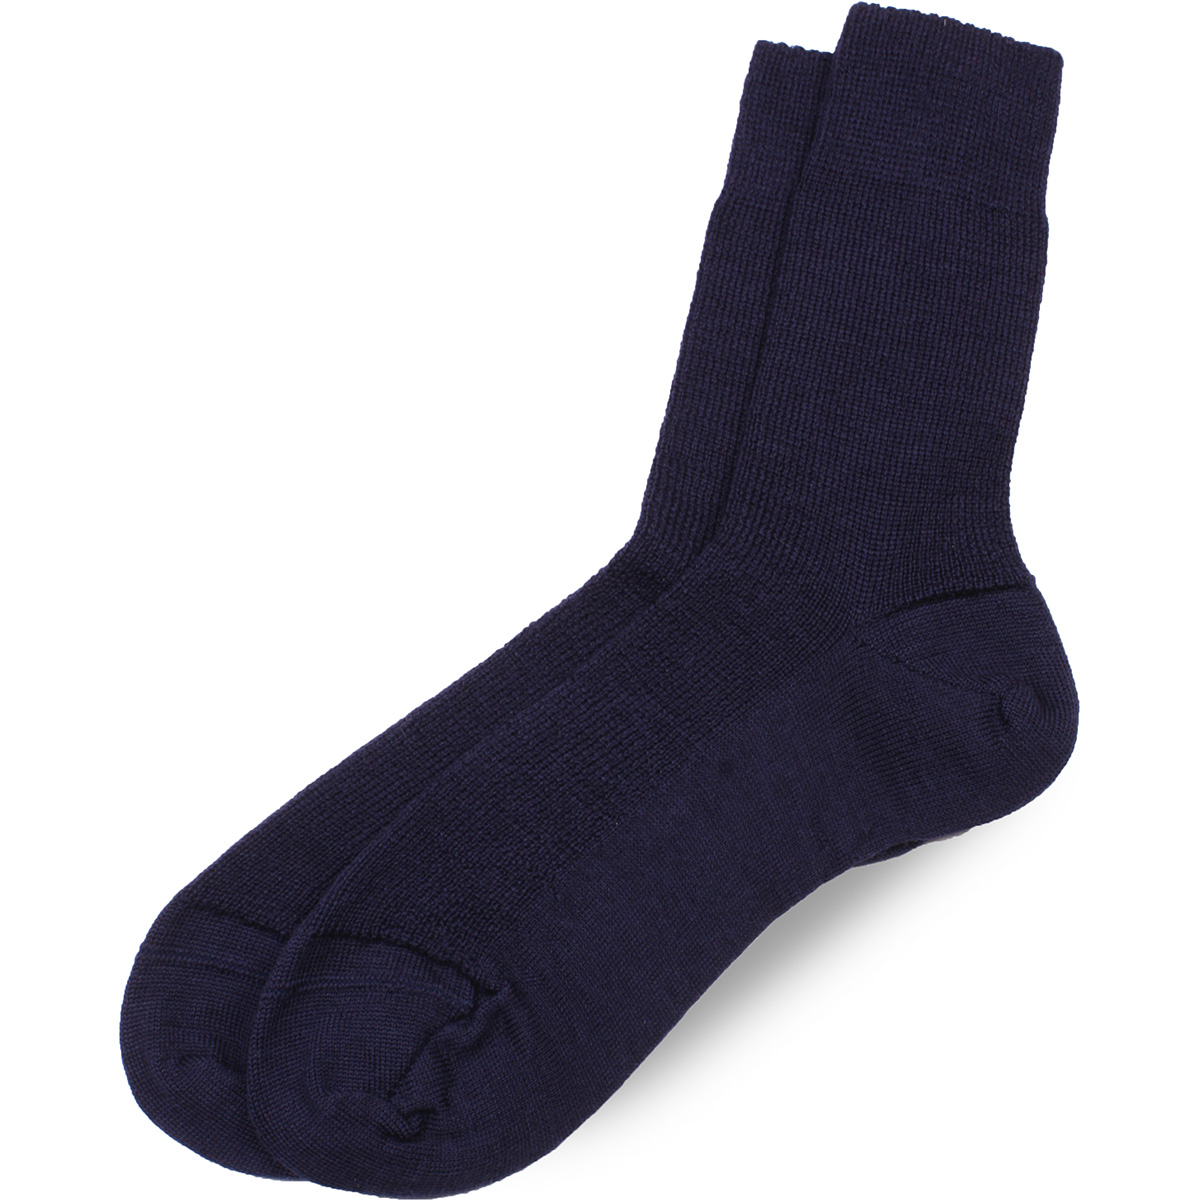 Kleding Gender-neutrale kleding volwassenen Sokken & Beenmode Handgebreide kniehoge wollen sokken rood en blauw fijne steken vakkundig gebreid 